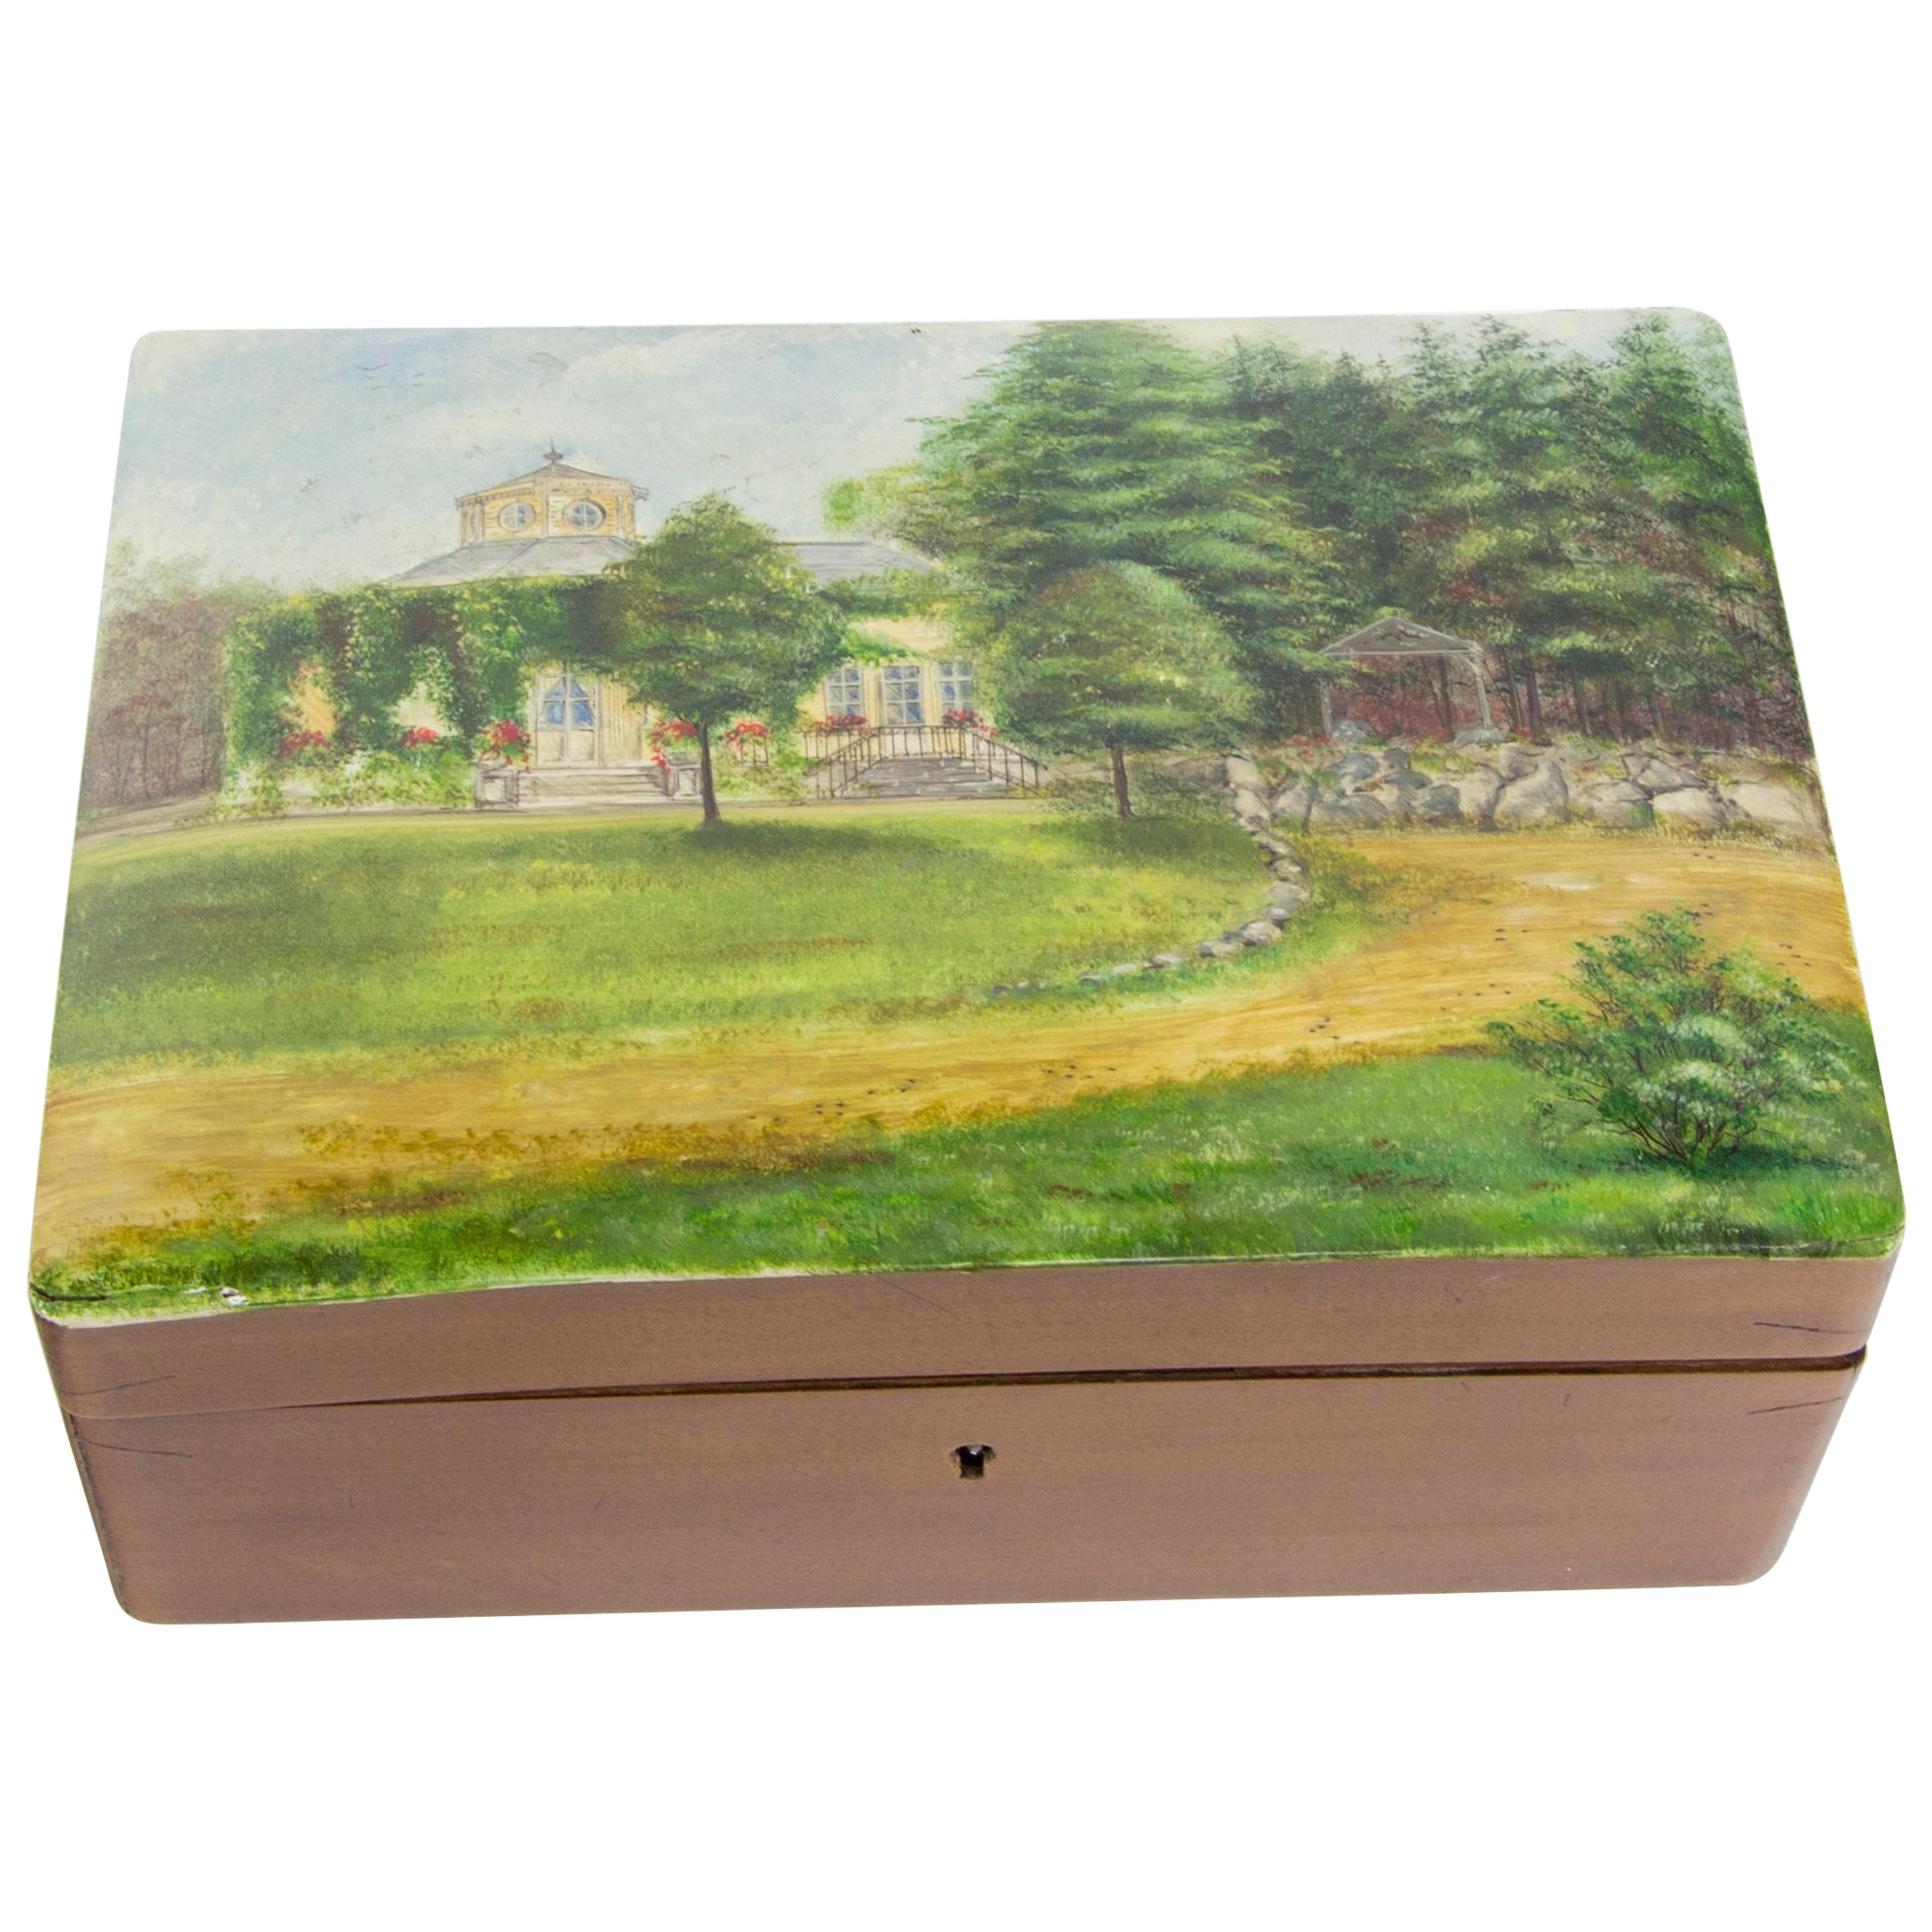 Hand-Painted Wood Box, circa 1930s